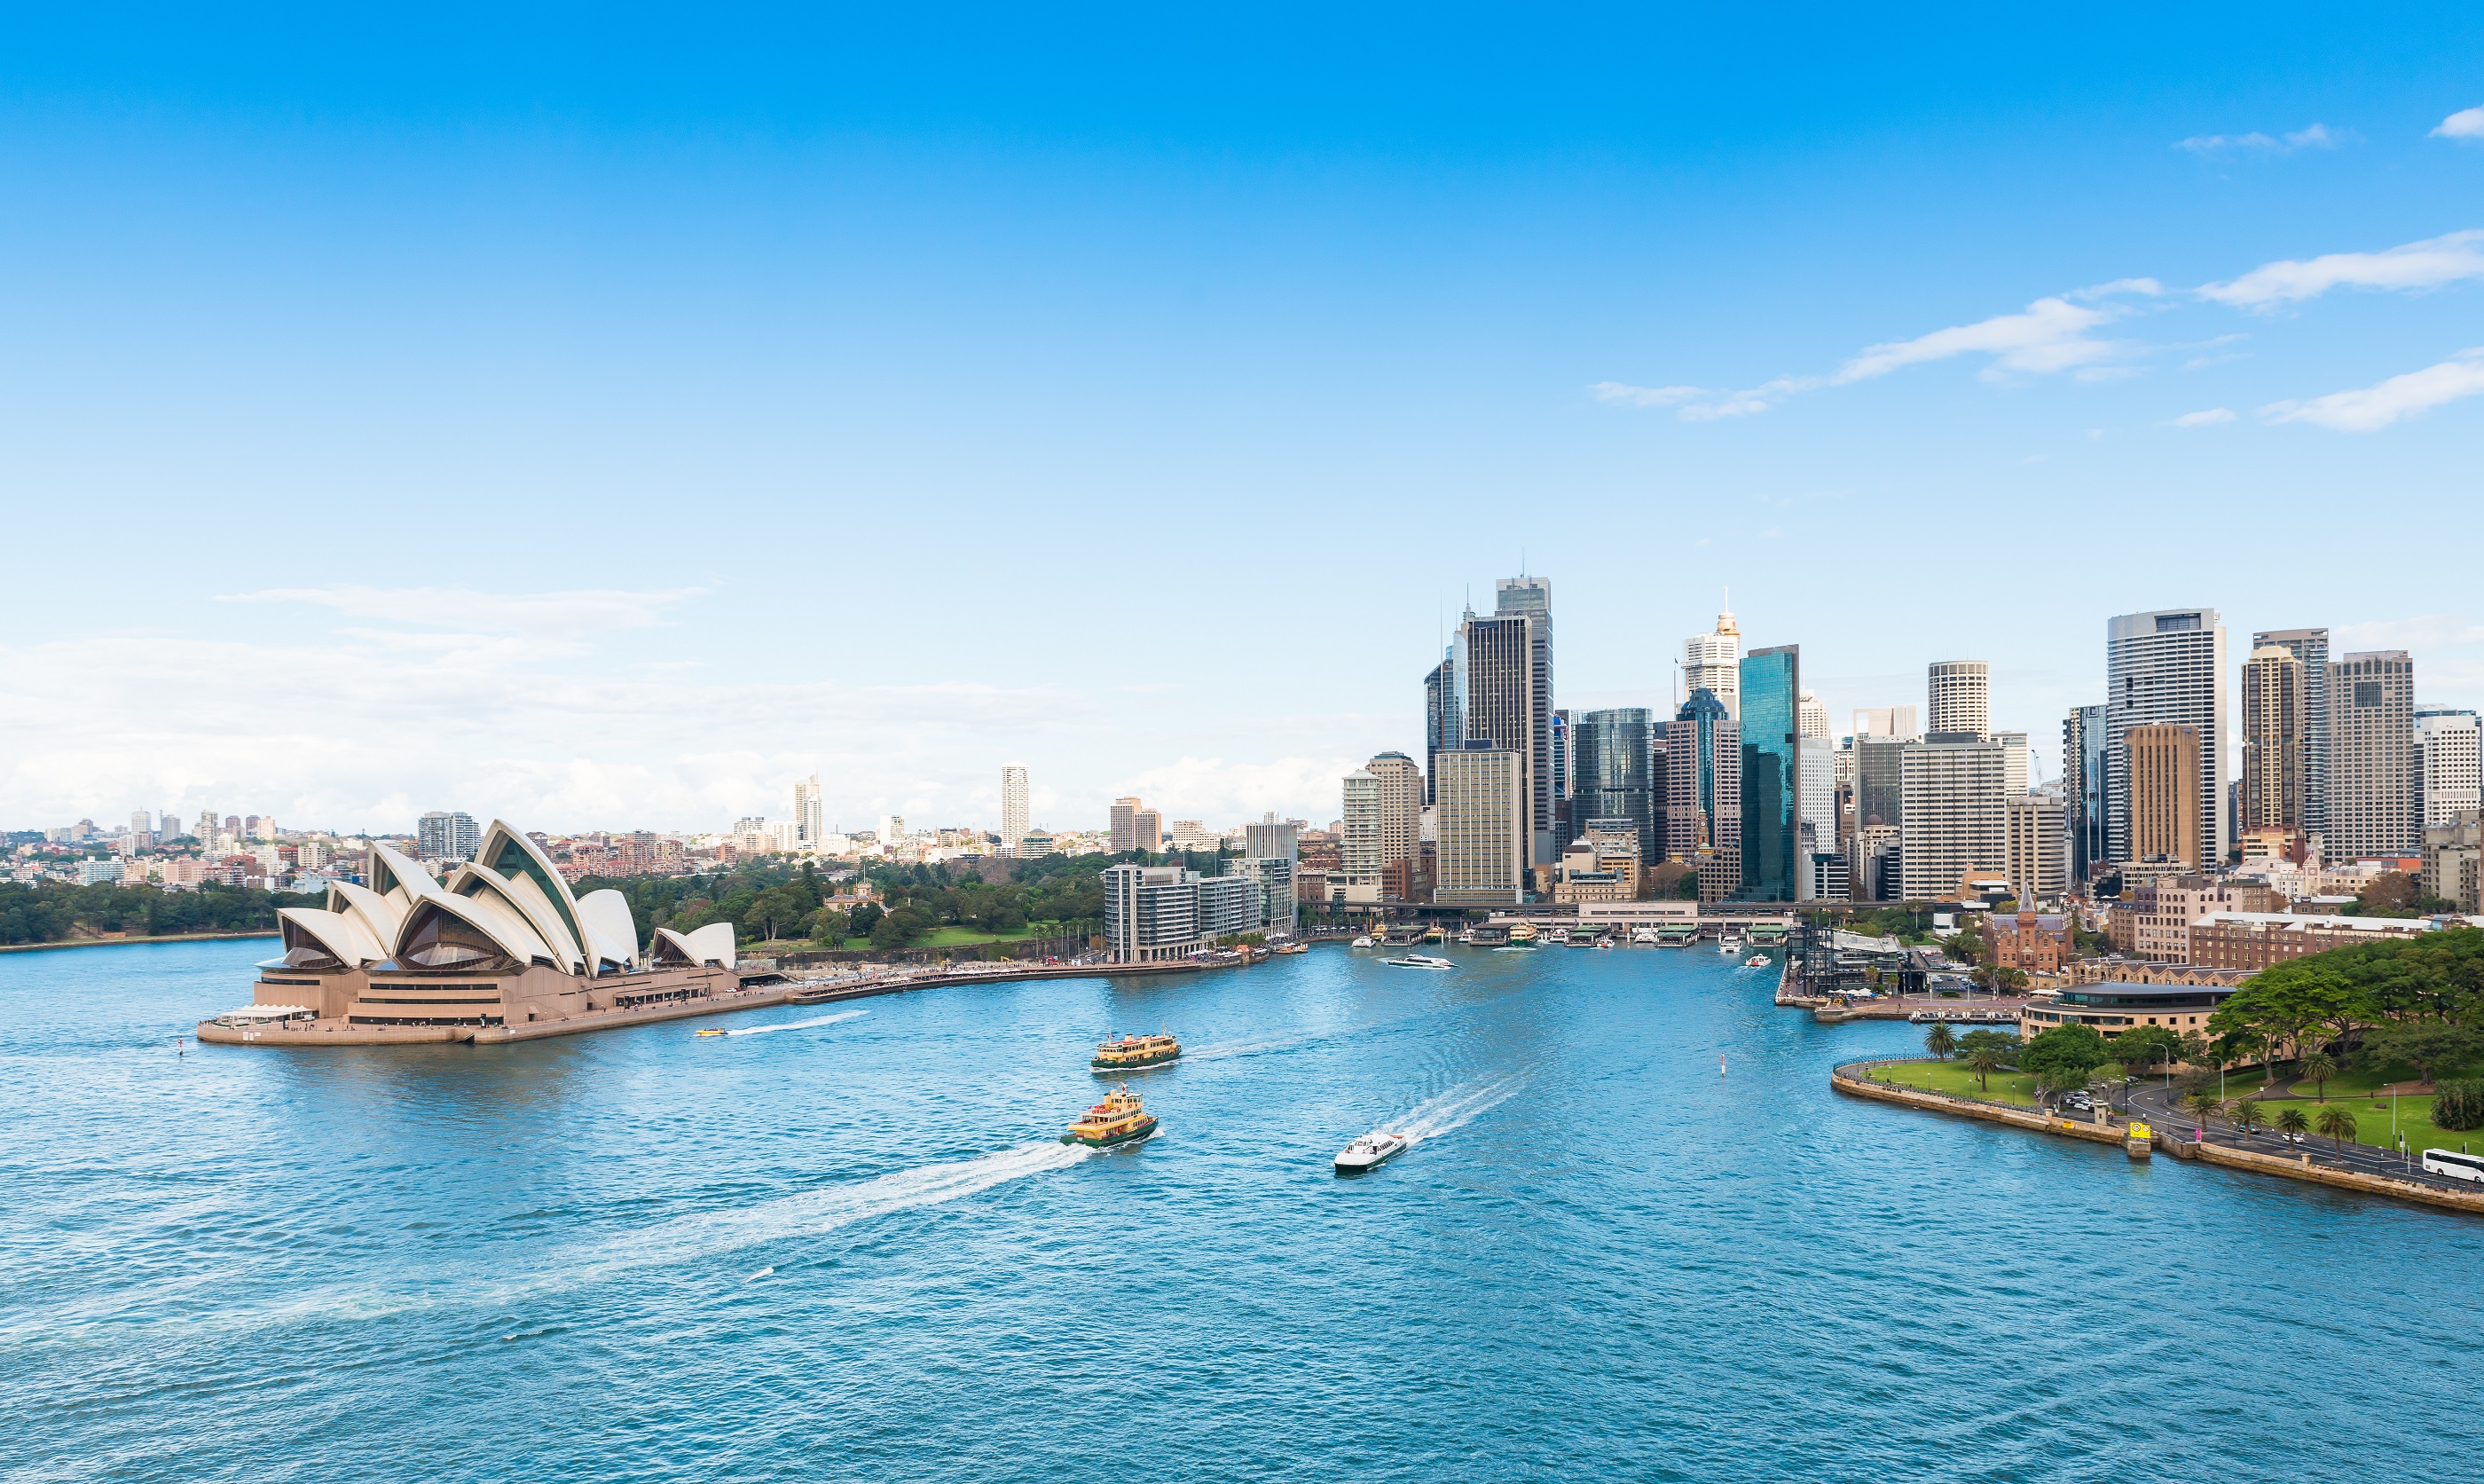 Sydney Harbour in Australia